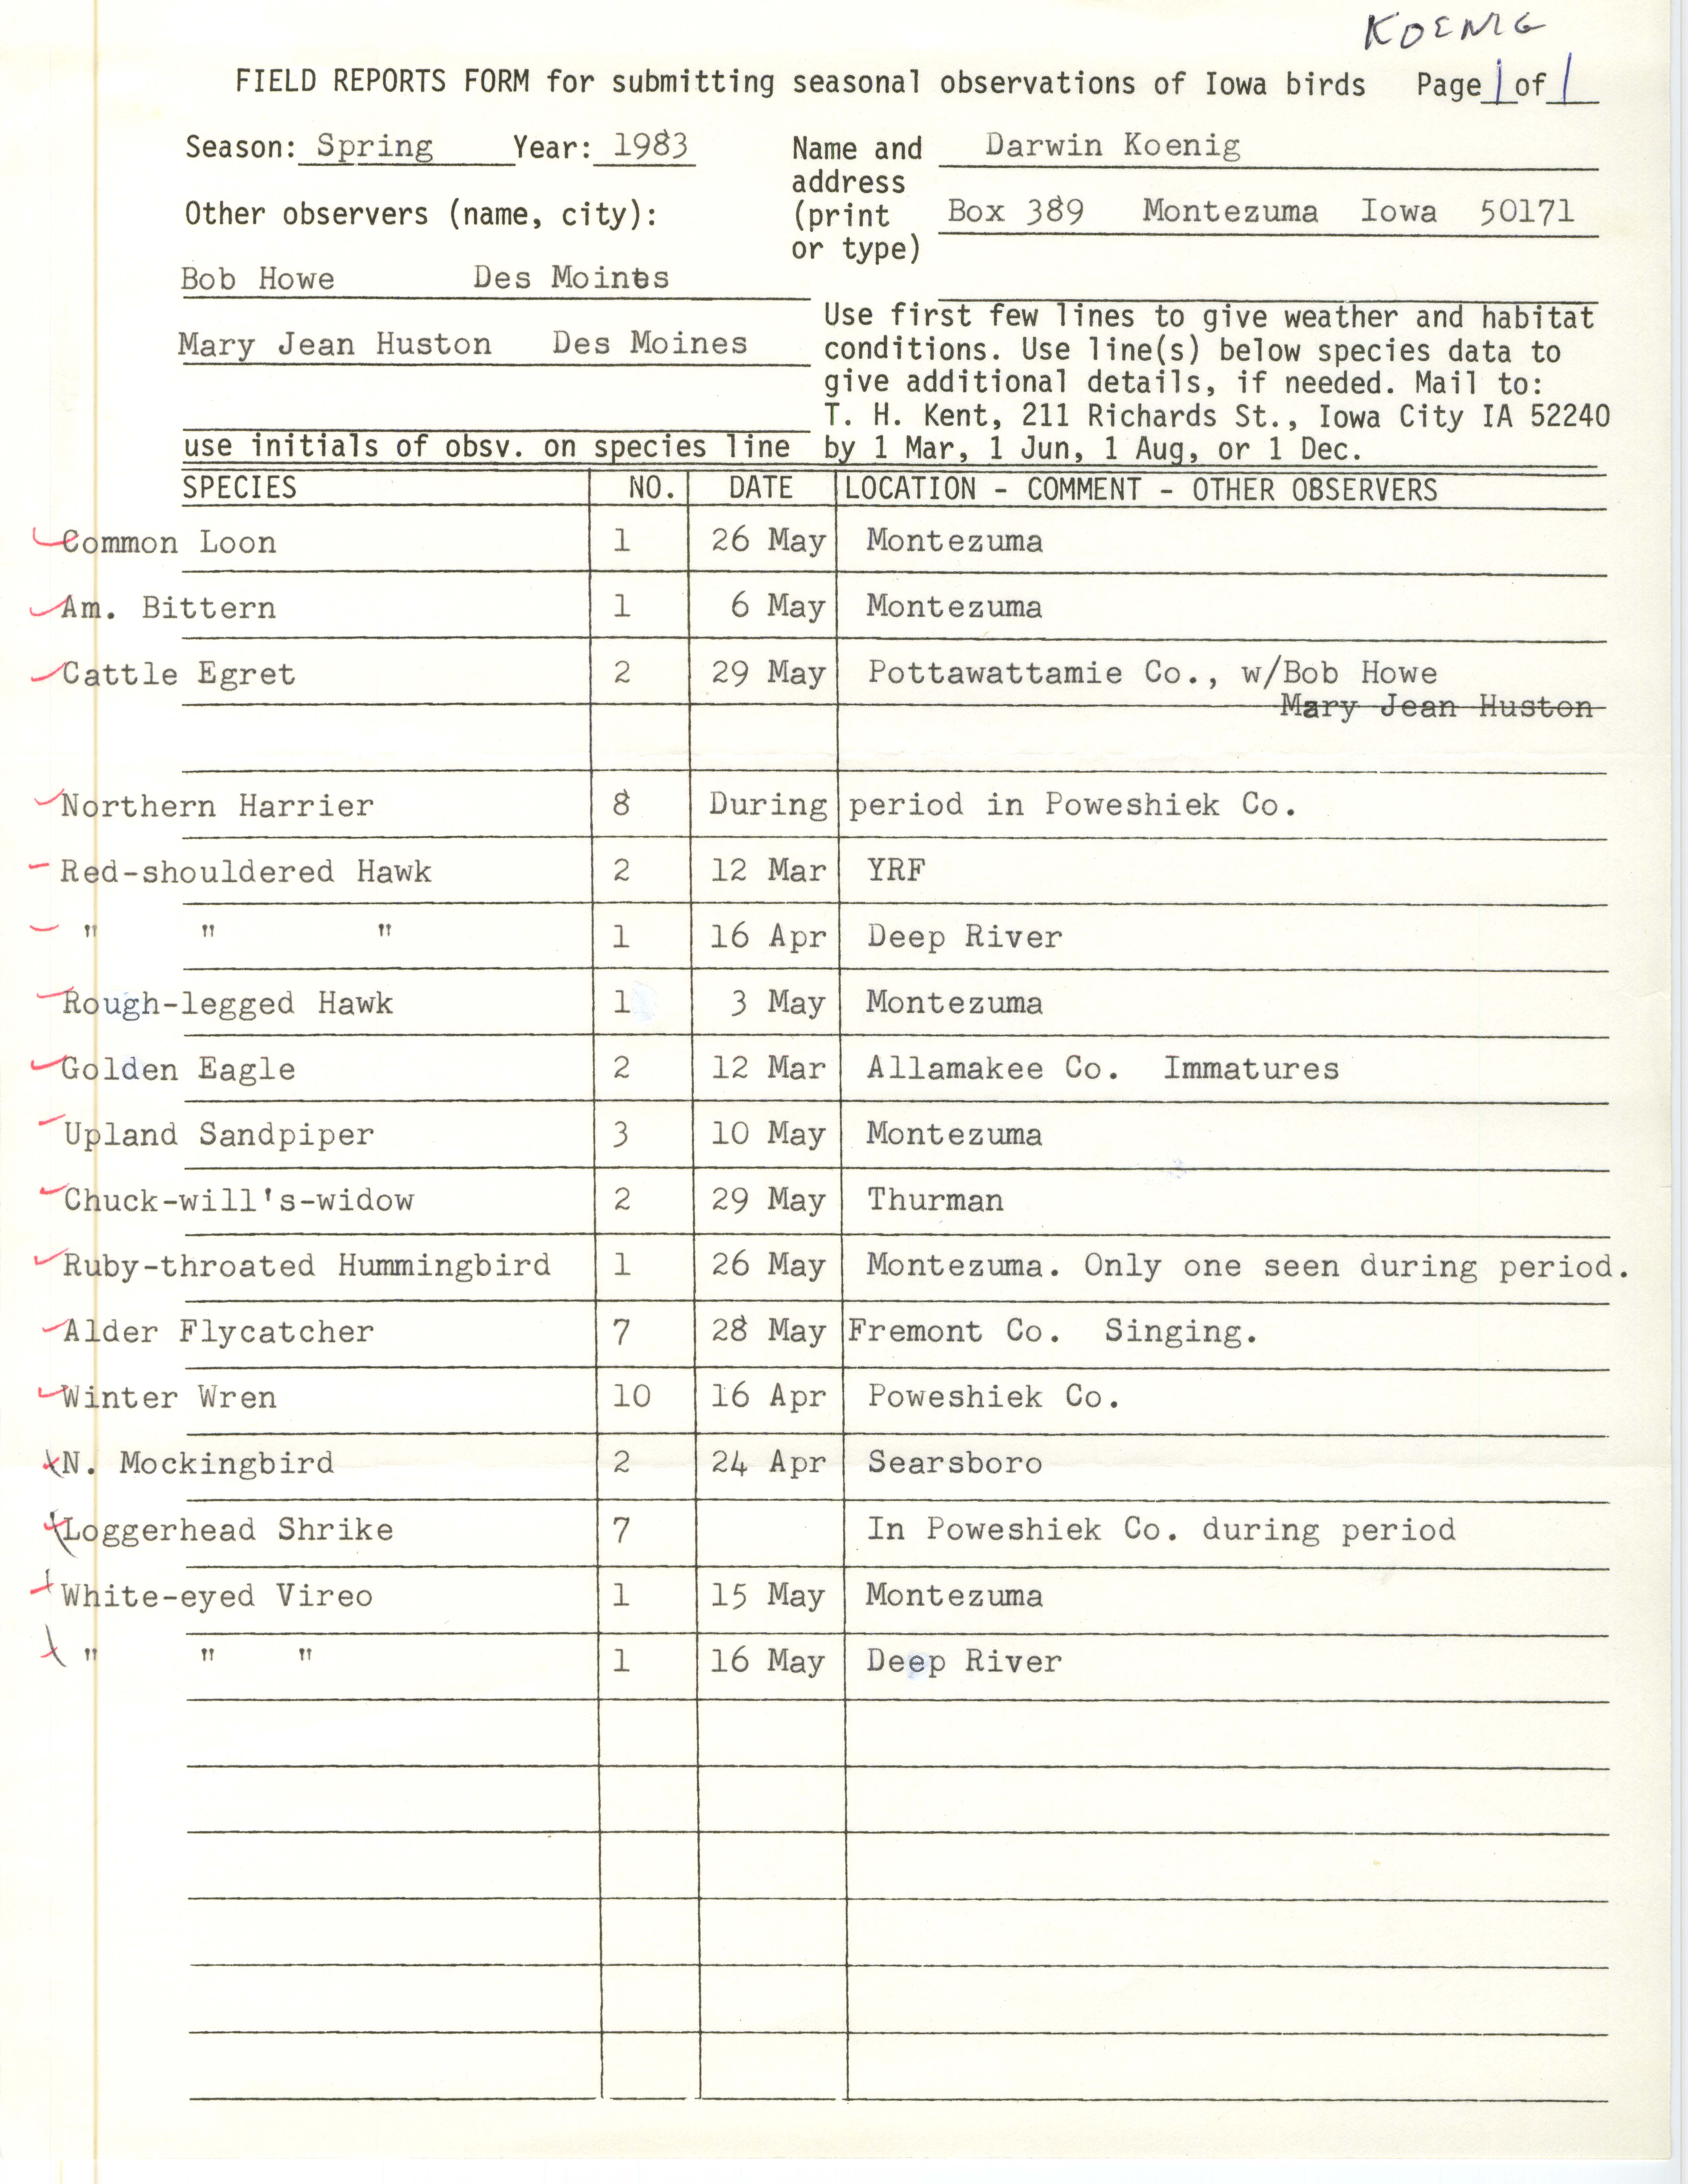 Field reports form for submitting seasonal observations of Iowa birds,  Darwin Koenig, spring 1983